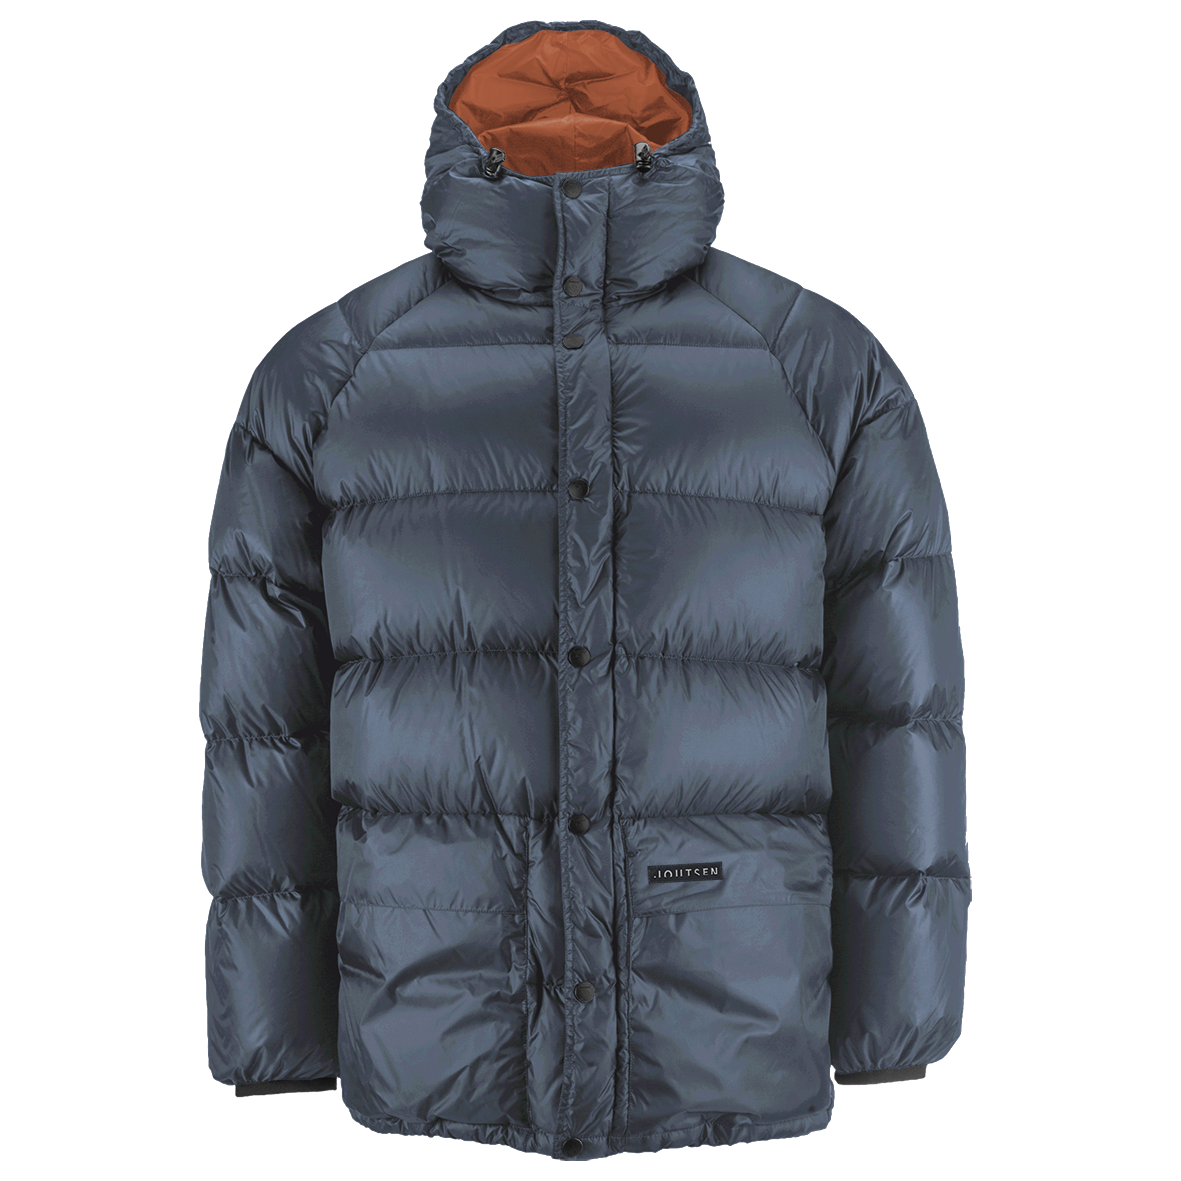 Tauko Down Coat Limited Edition - Joutsen - Atlantic blue/Autumn orange